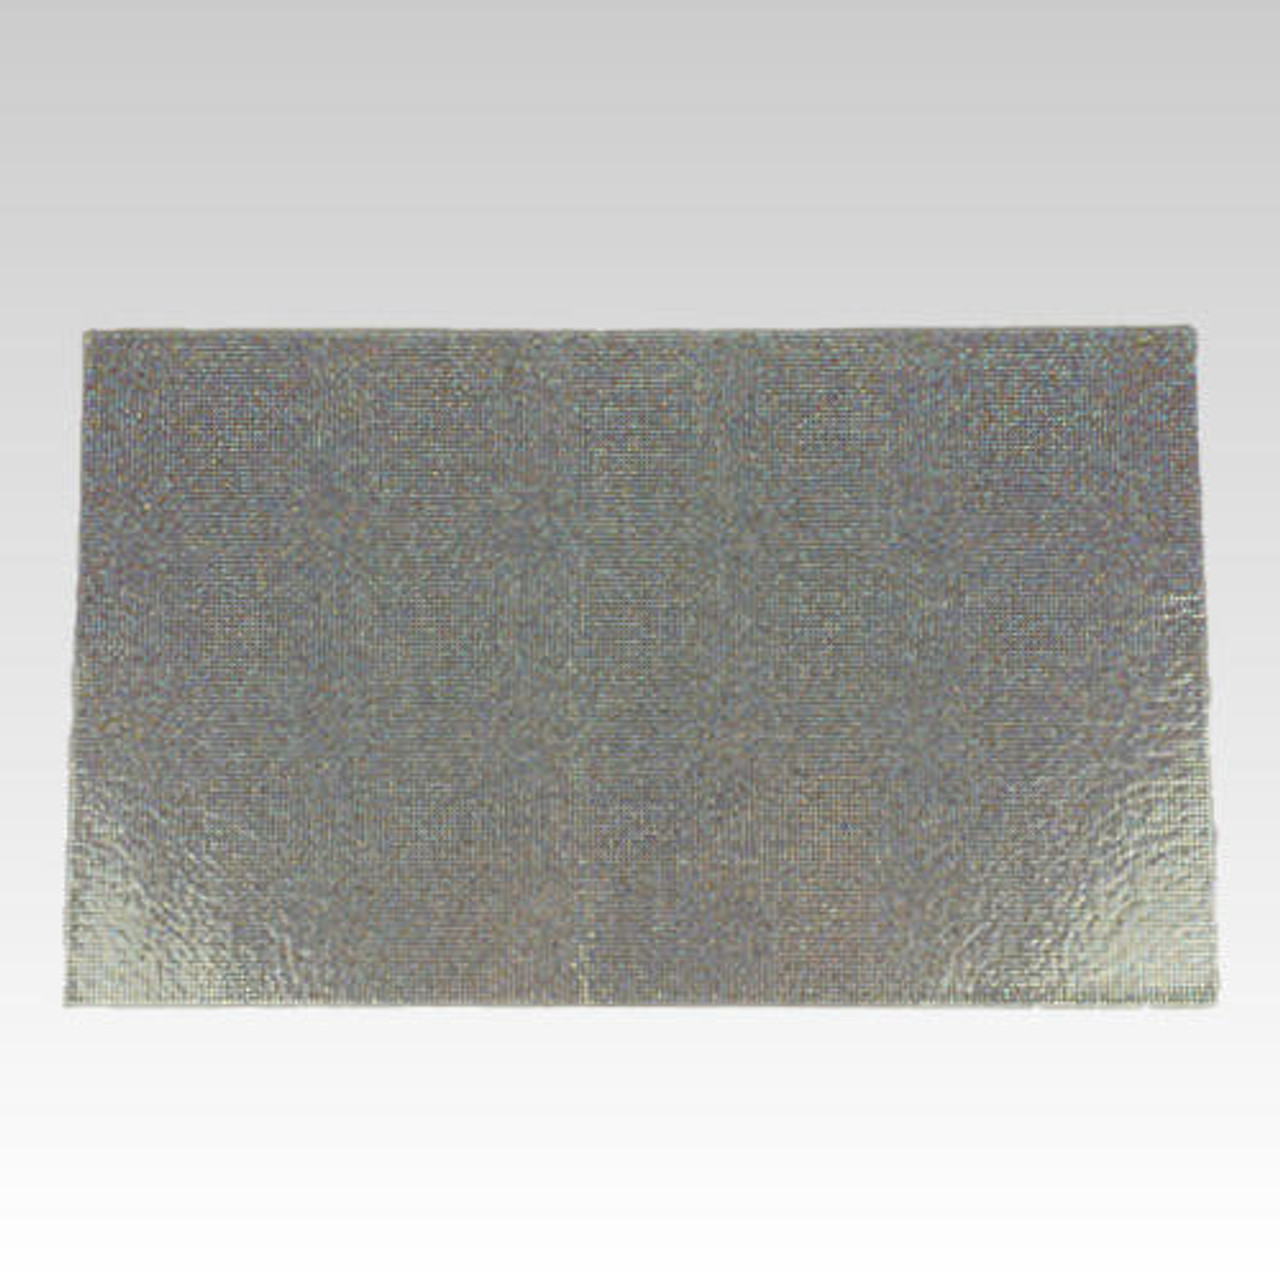 Holo Silver Glitter Vinyl Sheet Sheet Heat Transfer - Texas Rhinestone